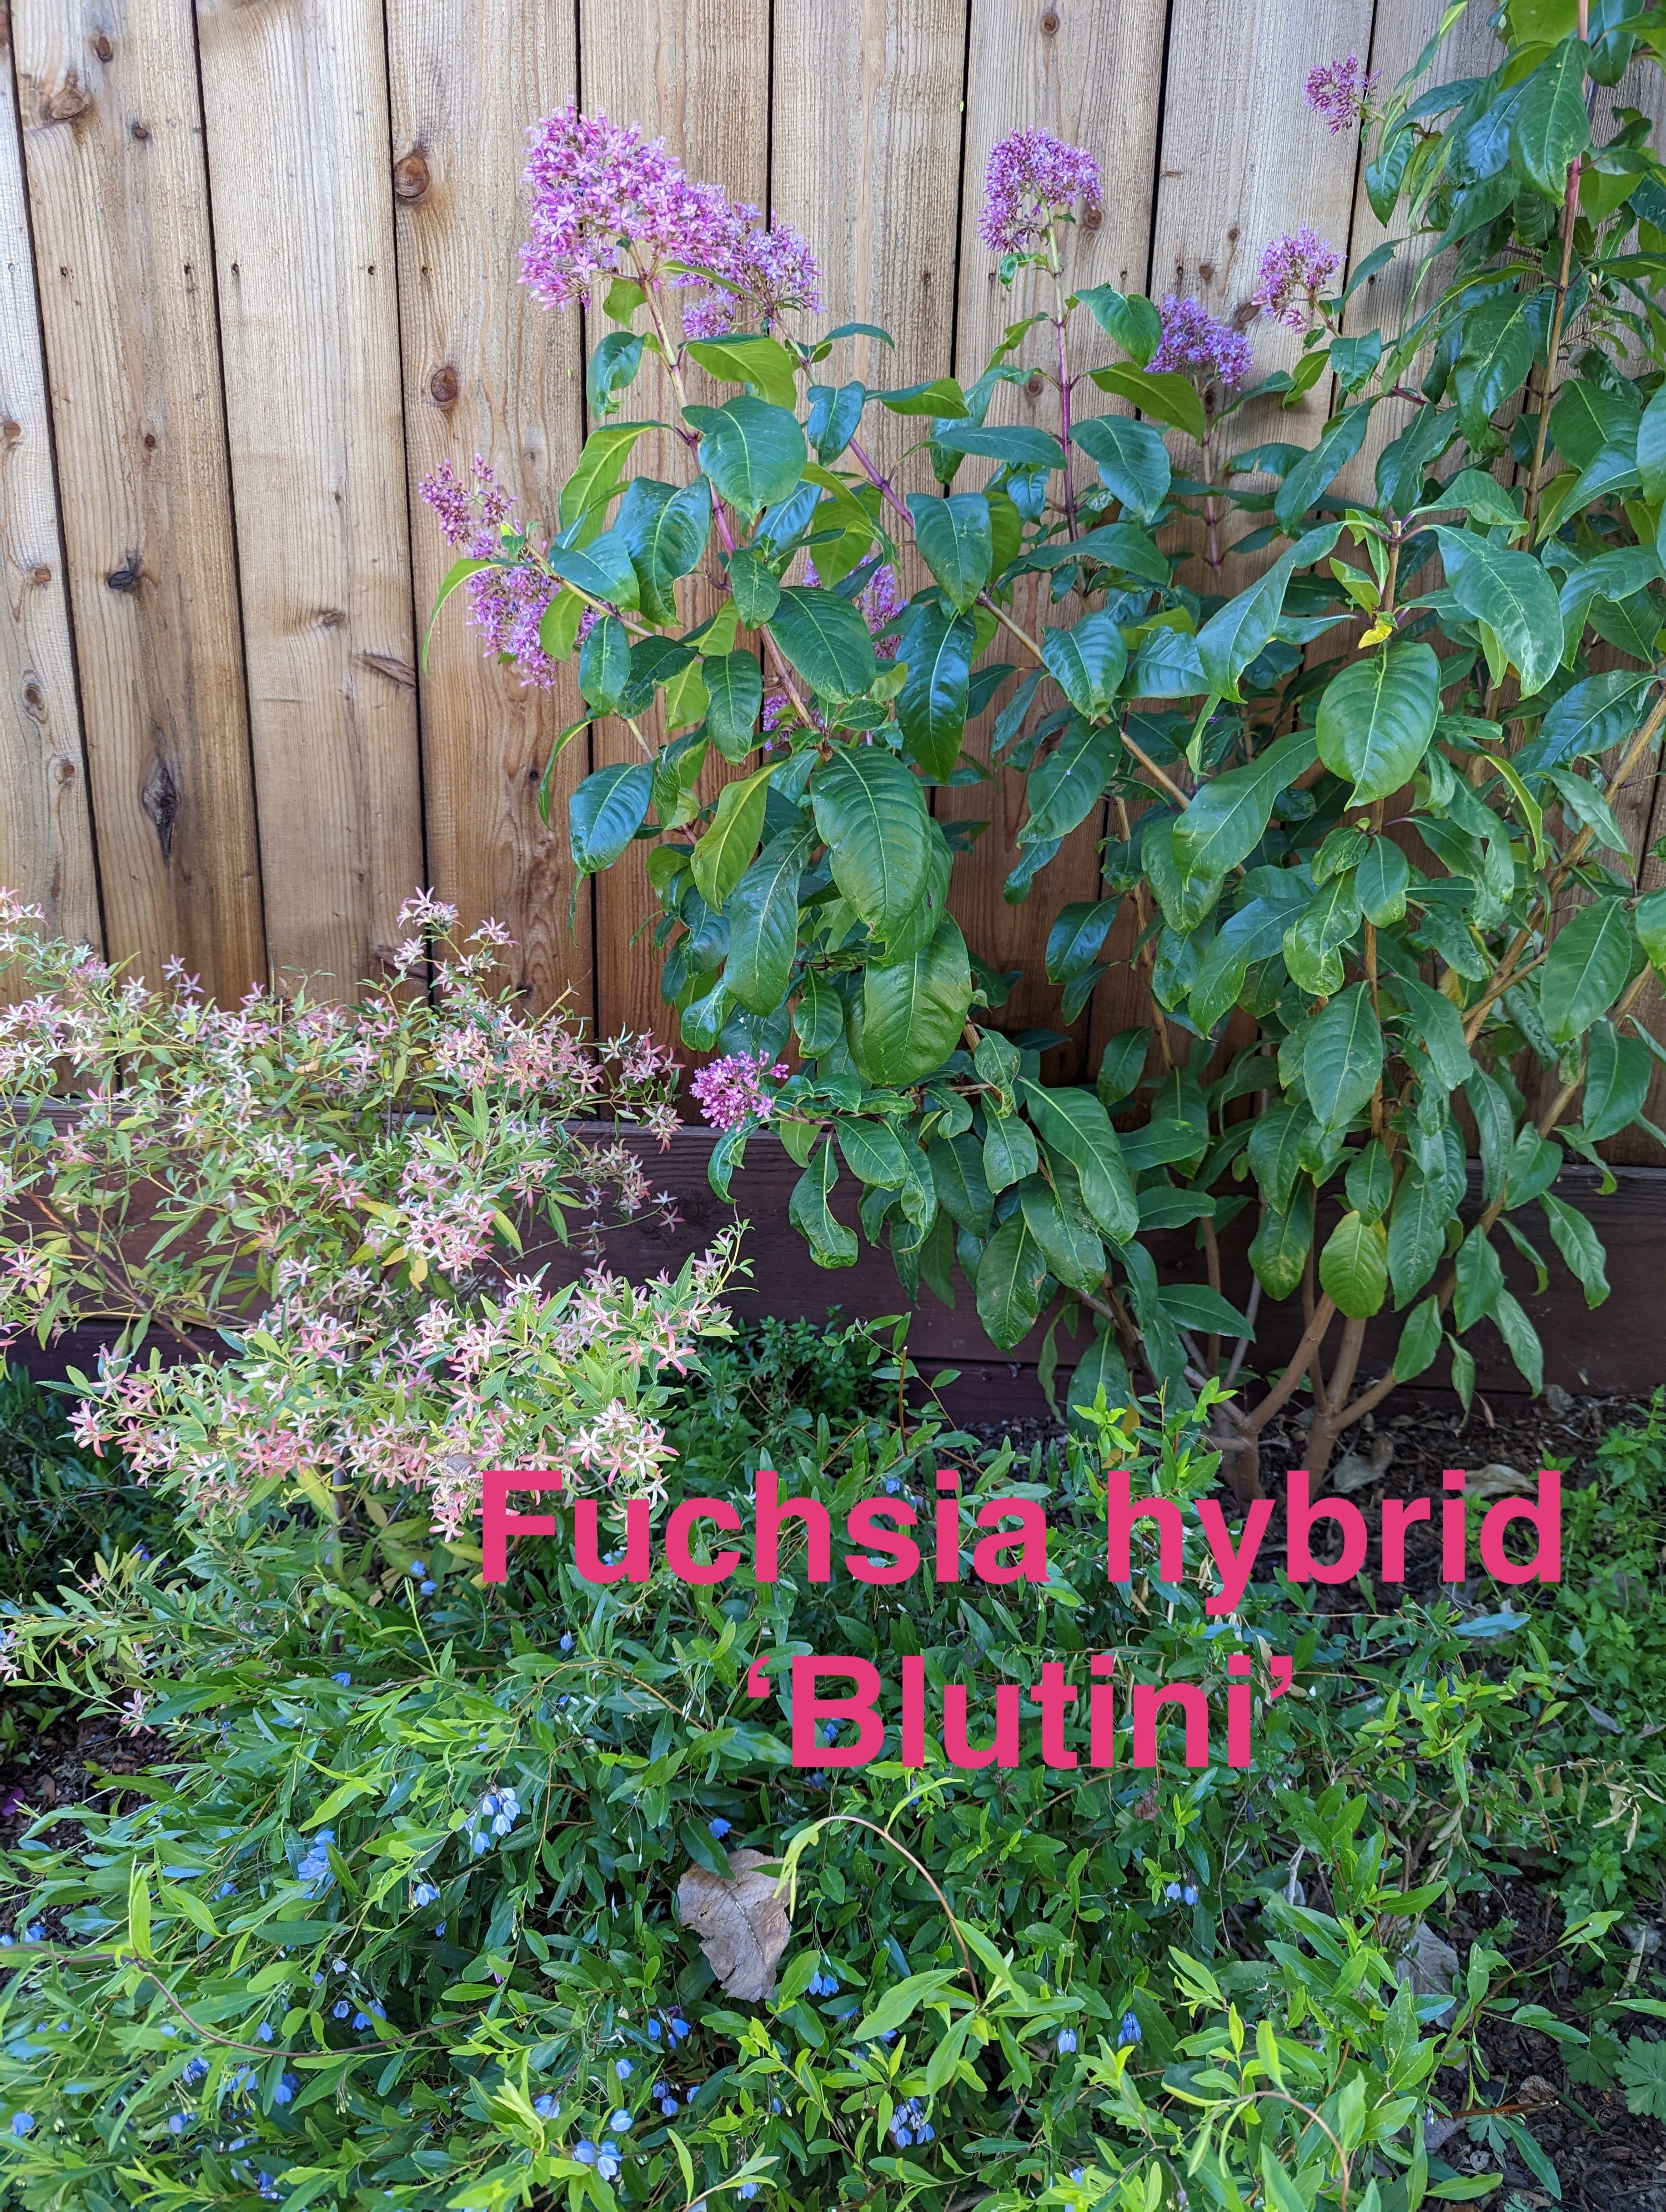 Fuchsia hybrid 'Blutini'